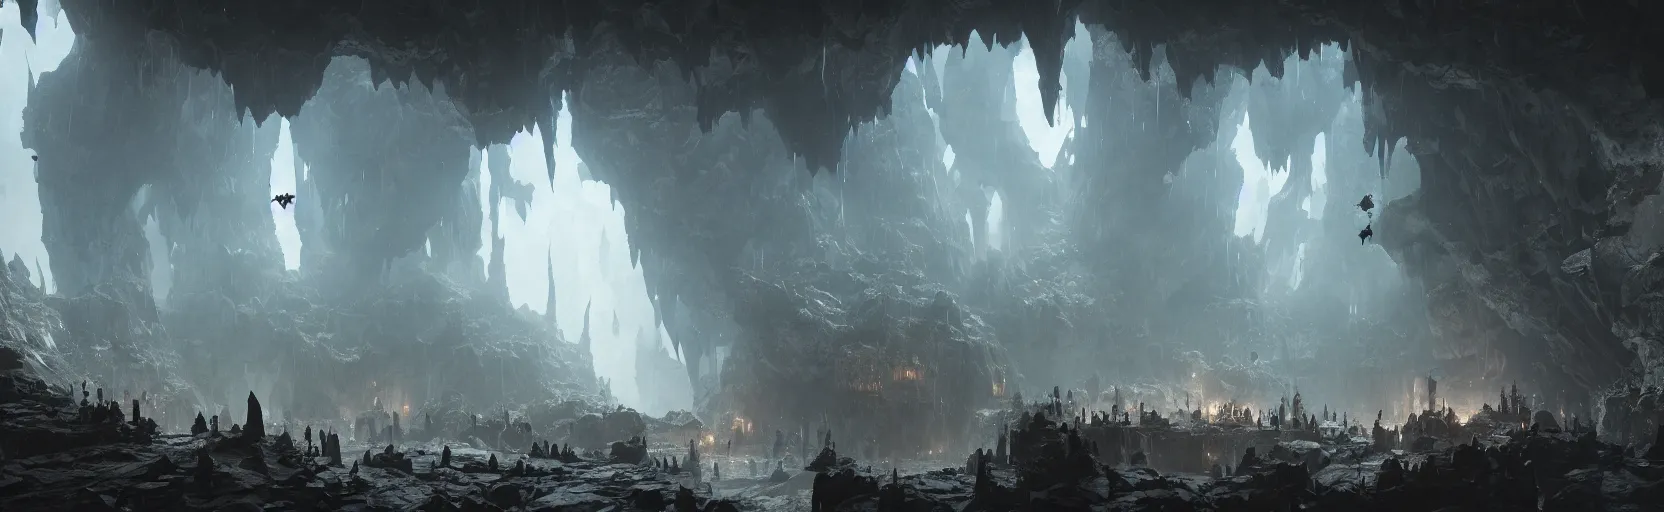 Prompt: inside view of the batman cave, bats flying around, stalagmites and stalaclites, unreal engine, Greg Rutkowski, James Gurney, artstation